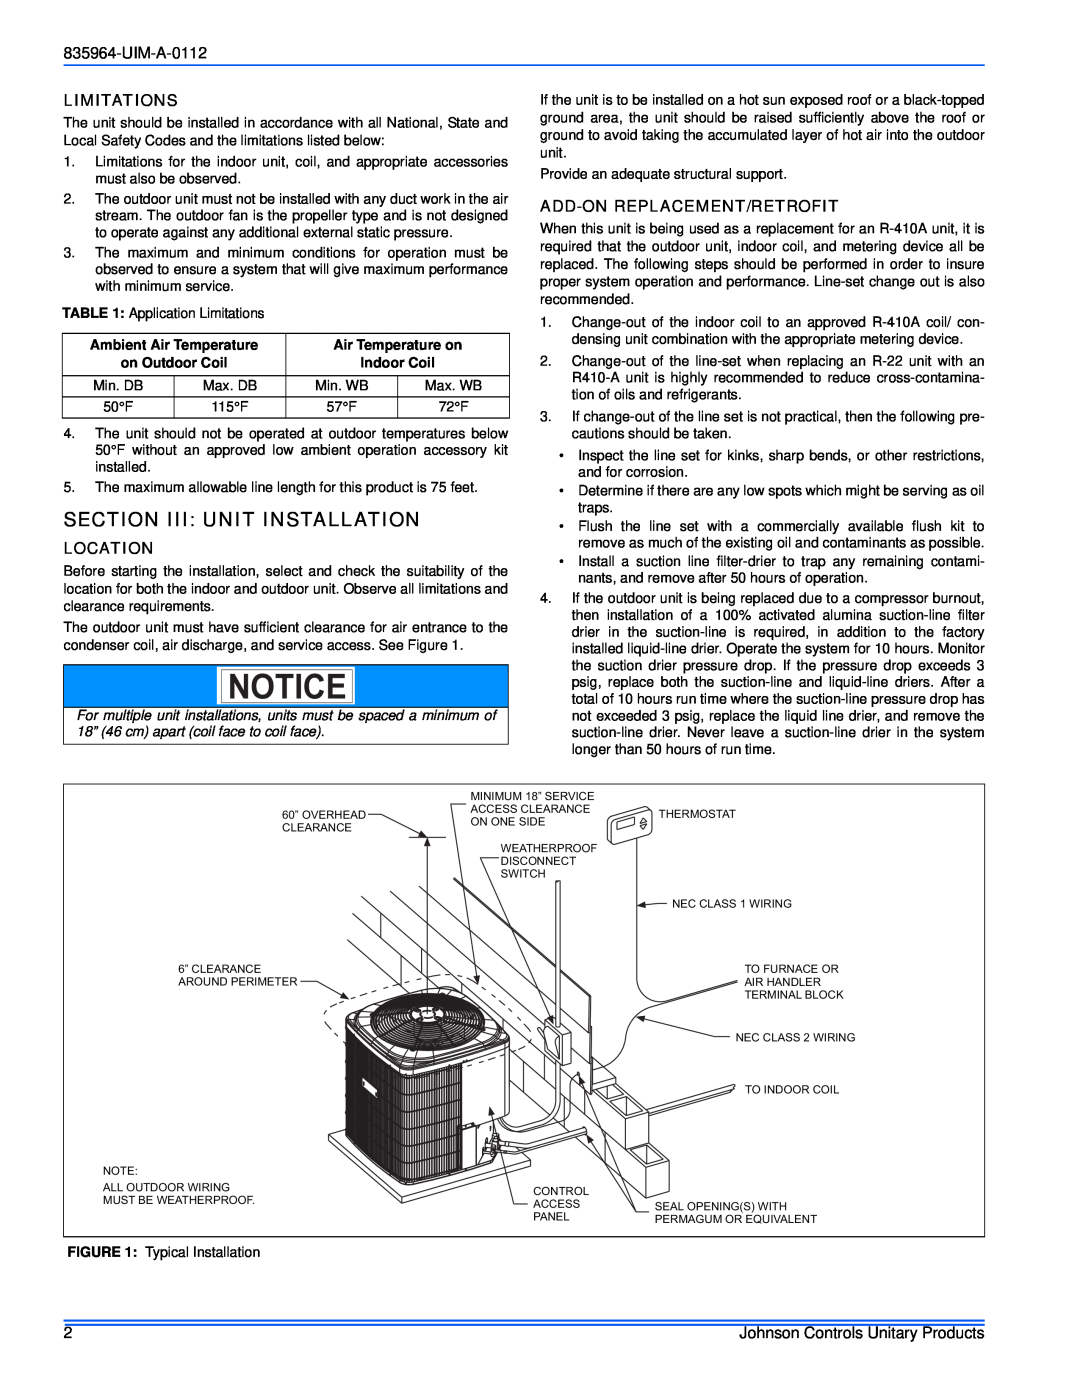 Johnson Controls R-410A Section Iii Unit Installation, UIM-A-0112, Limitations, Location, Add-Onreplacement/Retrofit 